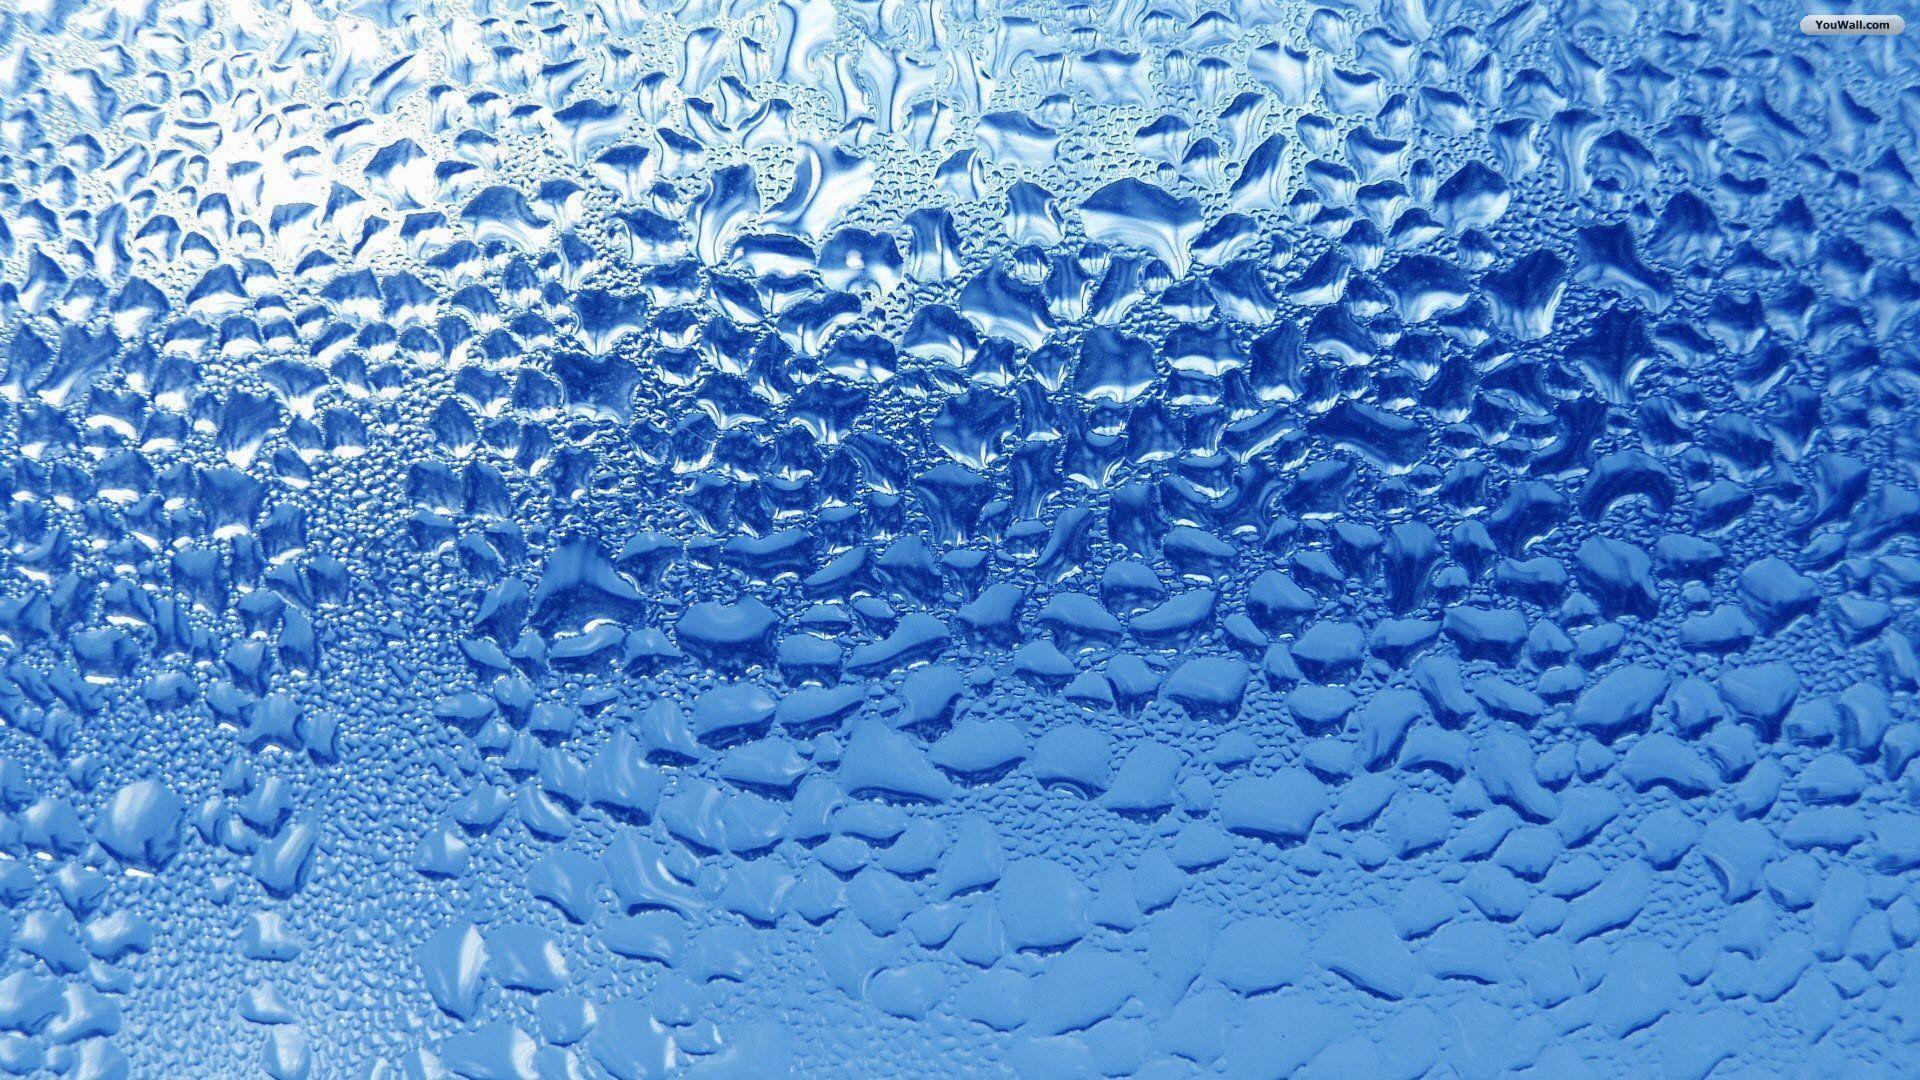 Water Drops Wallpaper 3496 1920x1080 px